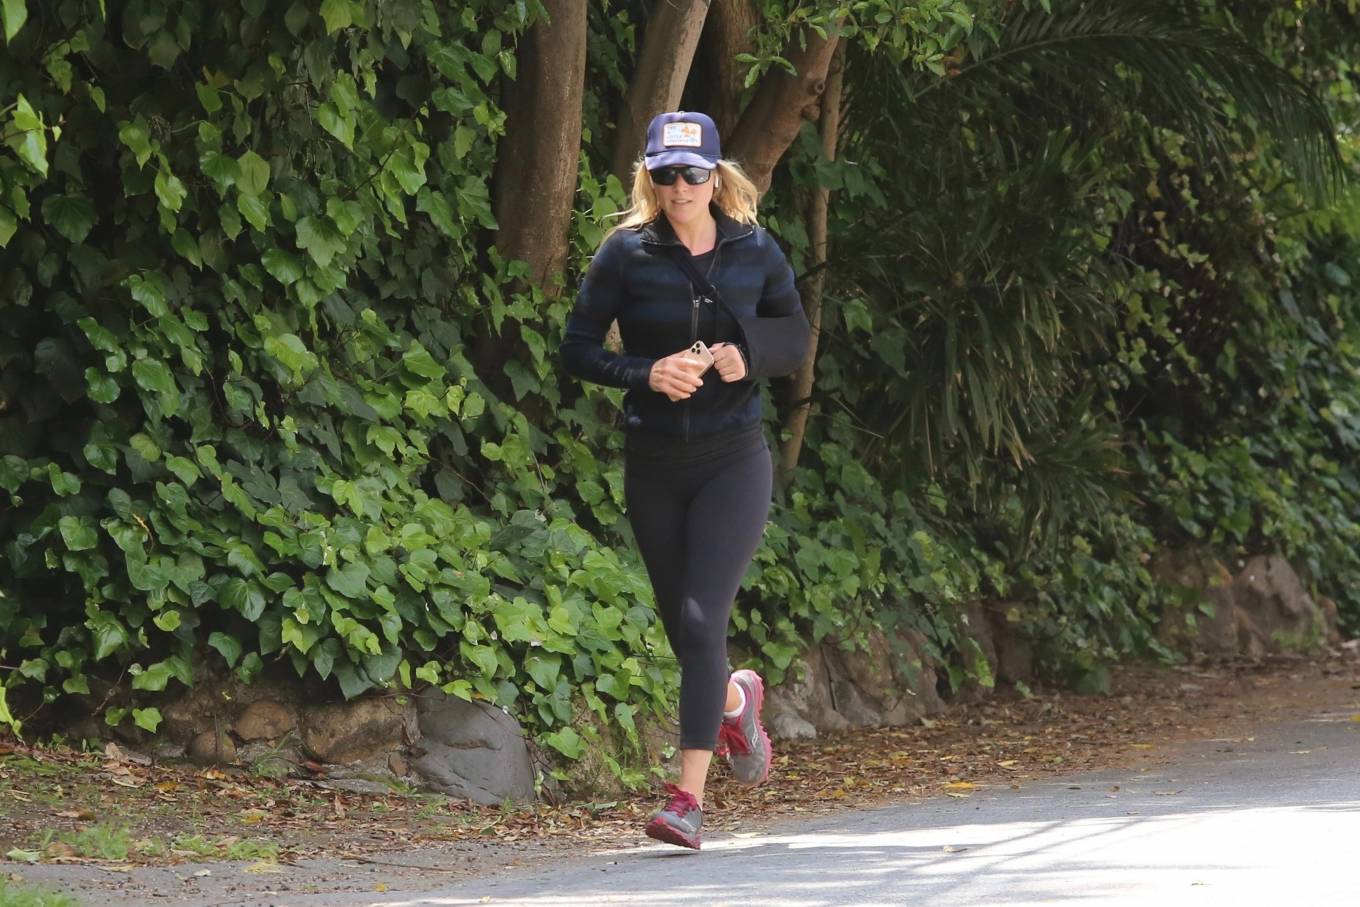 Ali Larter â€“ Sports a brace on her broken wrist during jogging